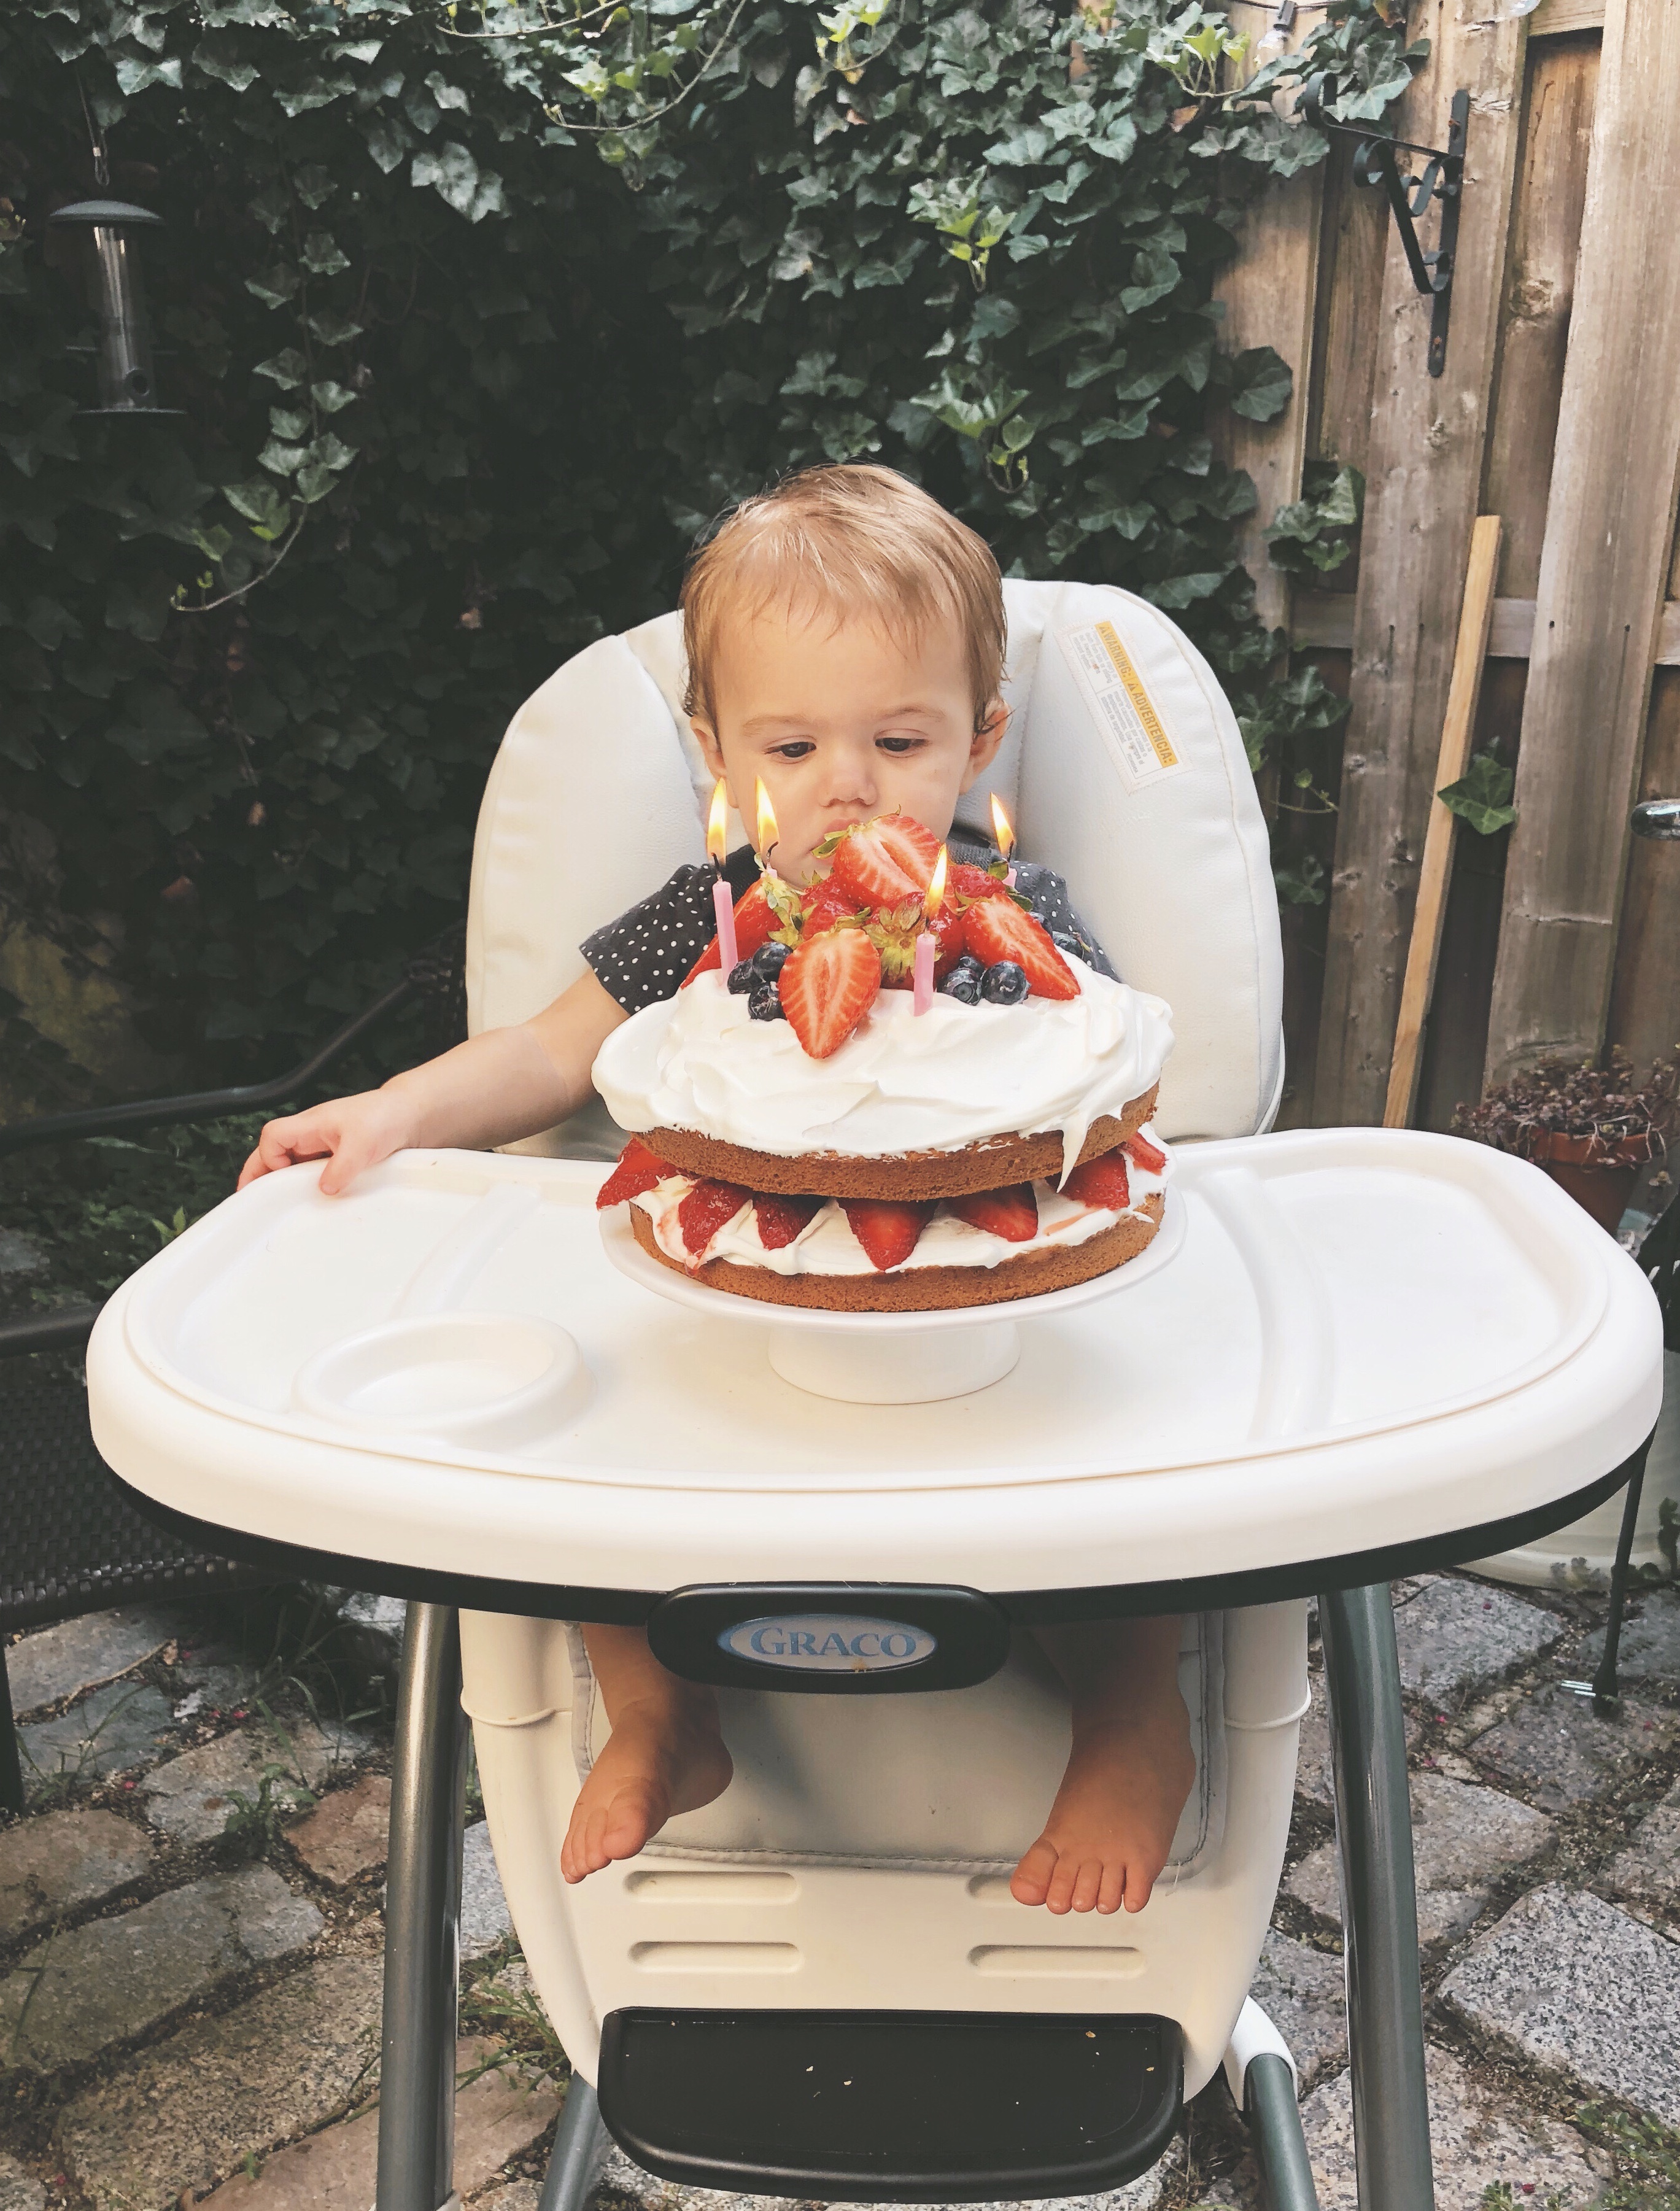 Lifestyle Blogger Chocolate & Lace shares her recipe for Strawberry Celebration Pound Cake.